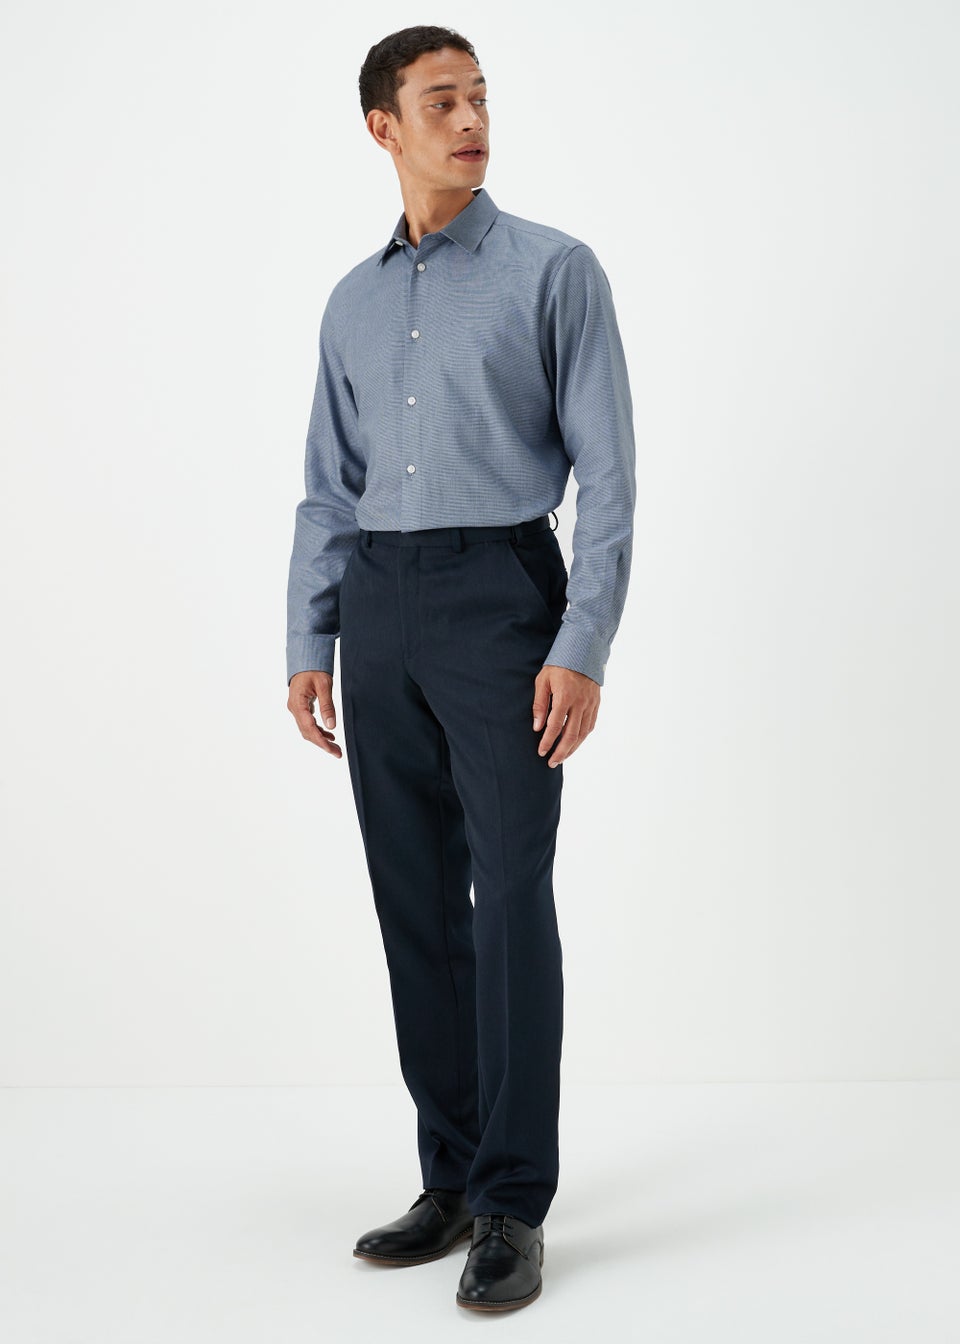 Taylor & Wright Navy Texture Regular Fit Shirt